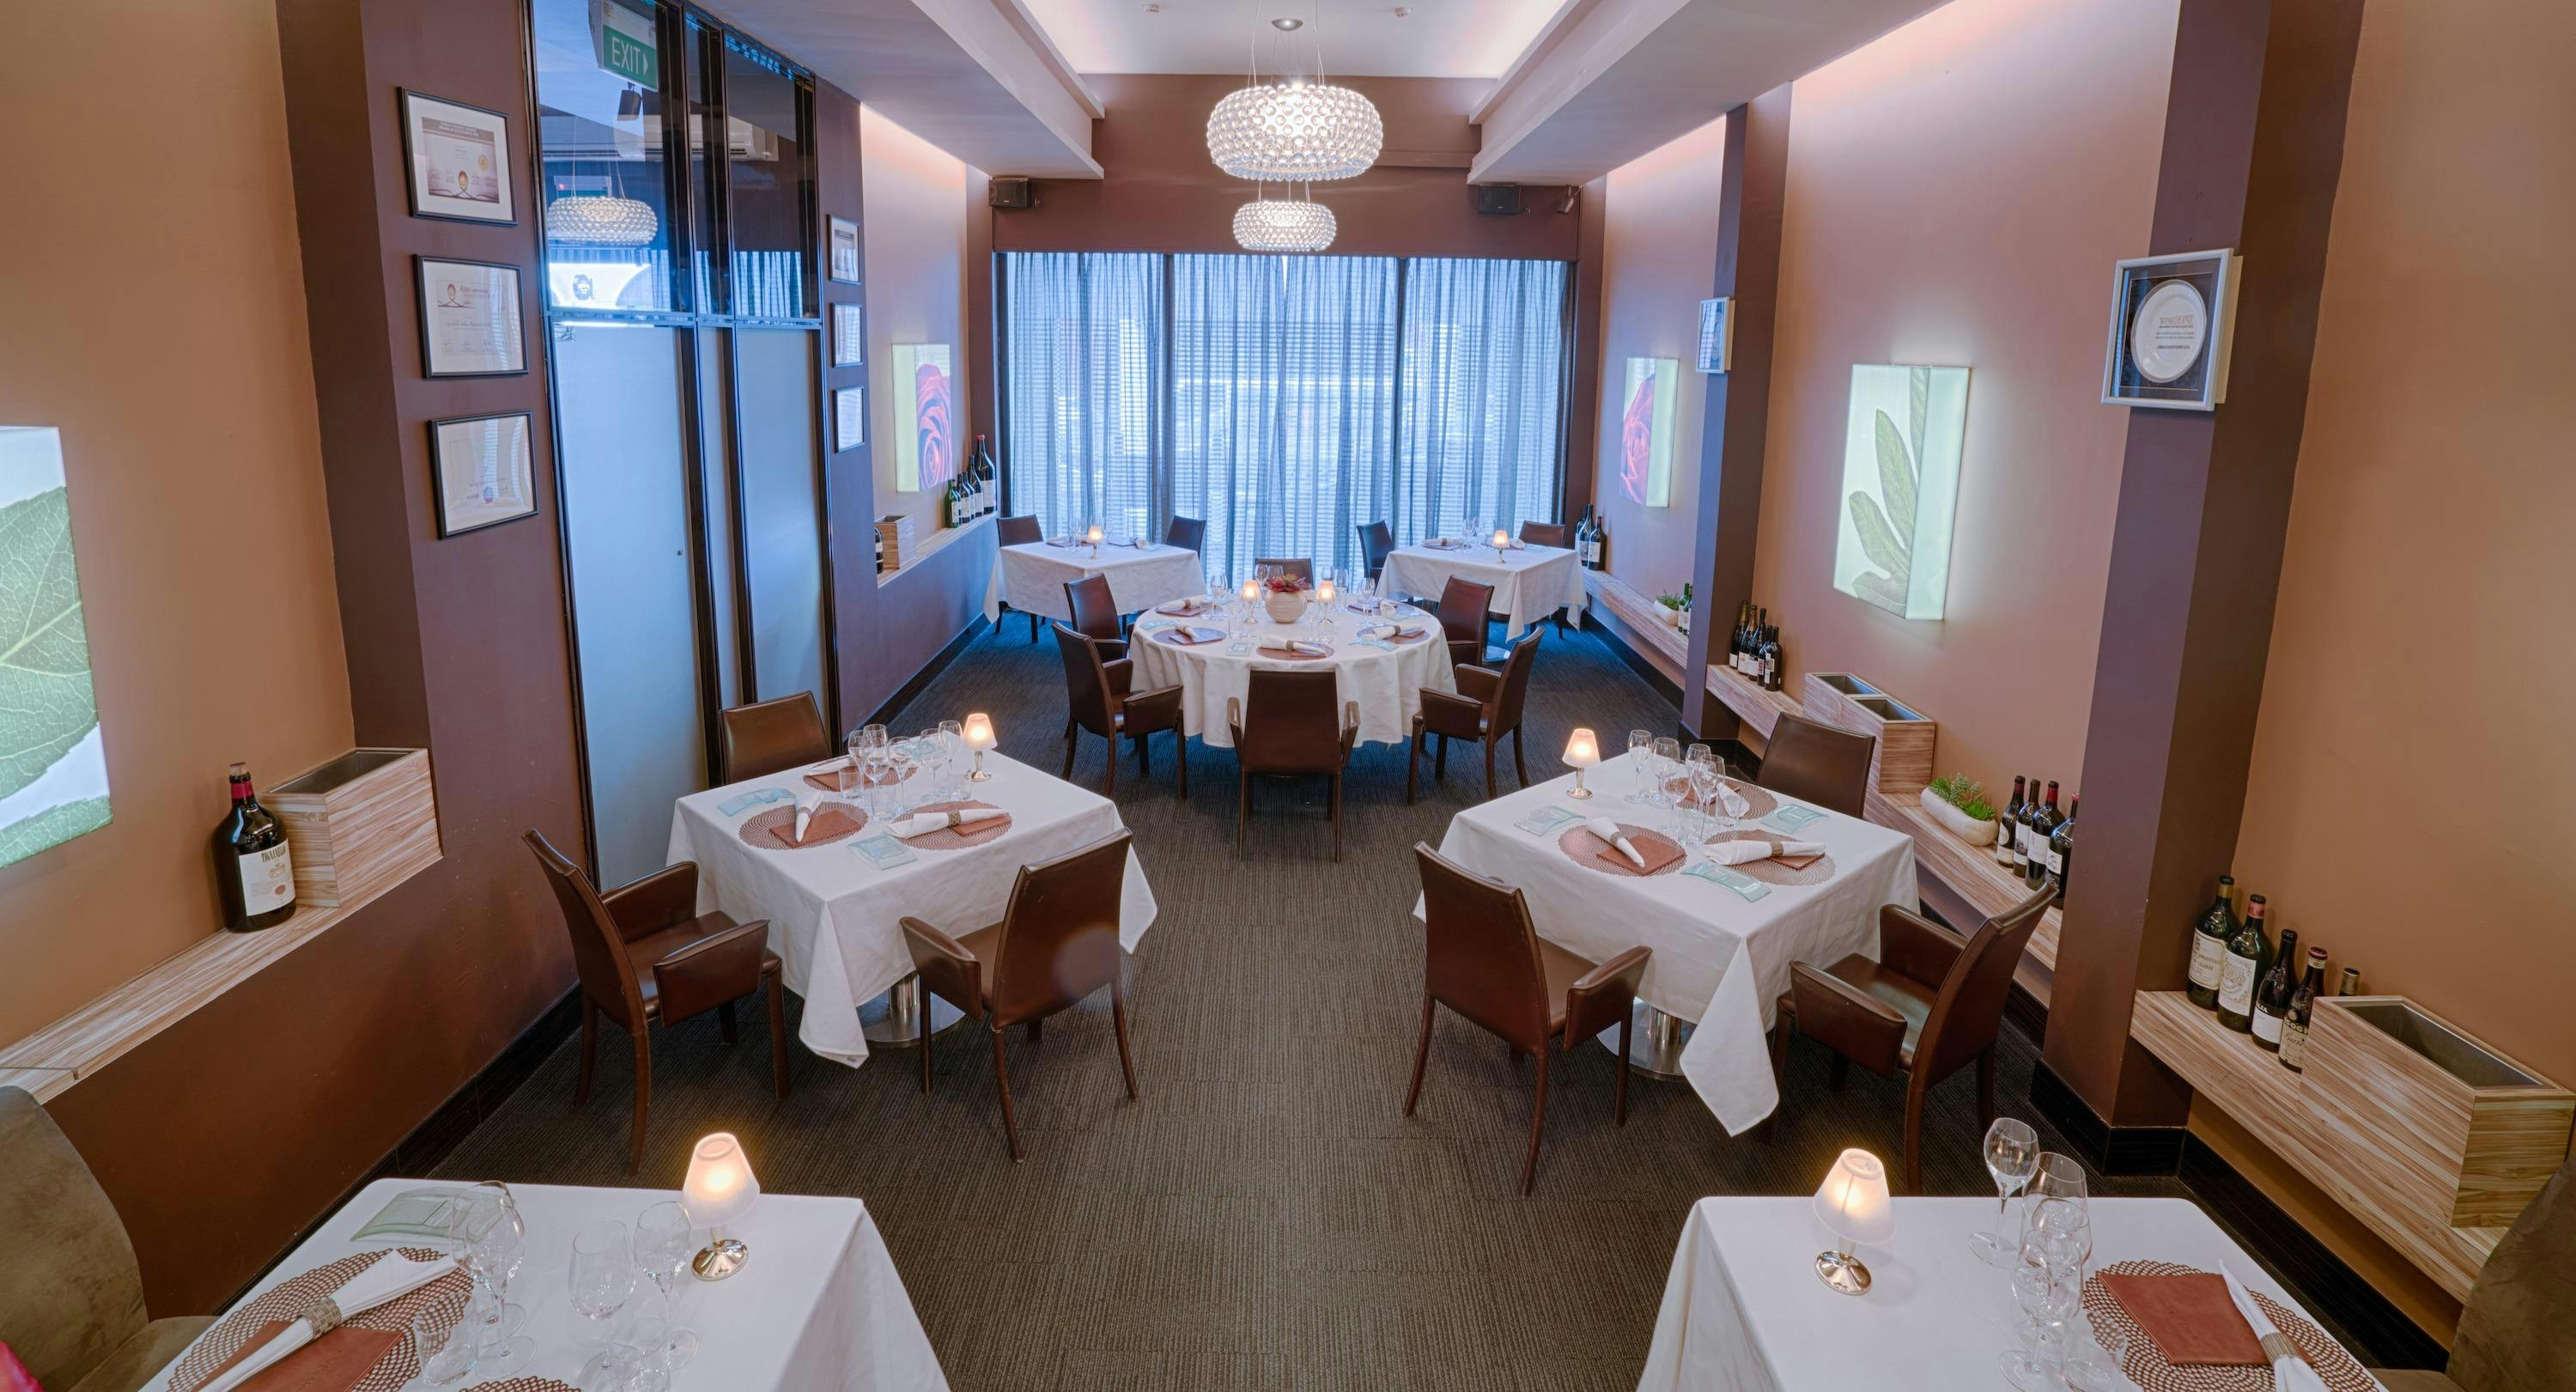 Photo of restaurant Garibaldi Italian Restaurant and Bar in Bugis, Singapore